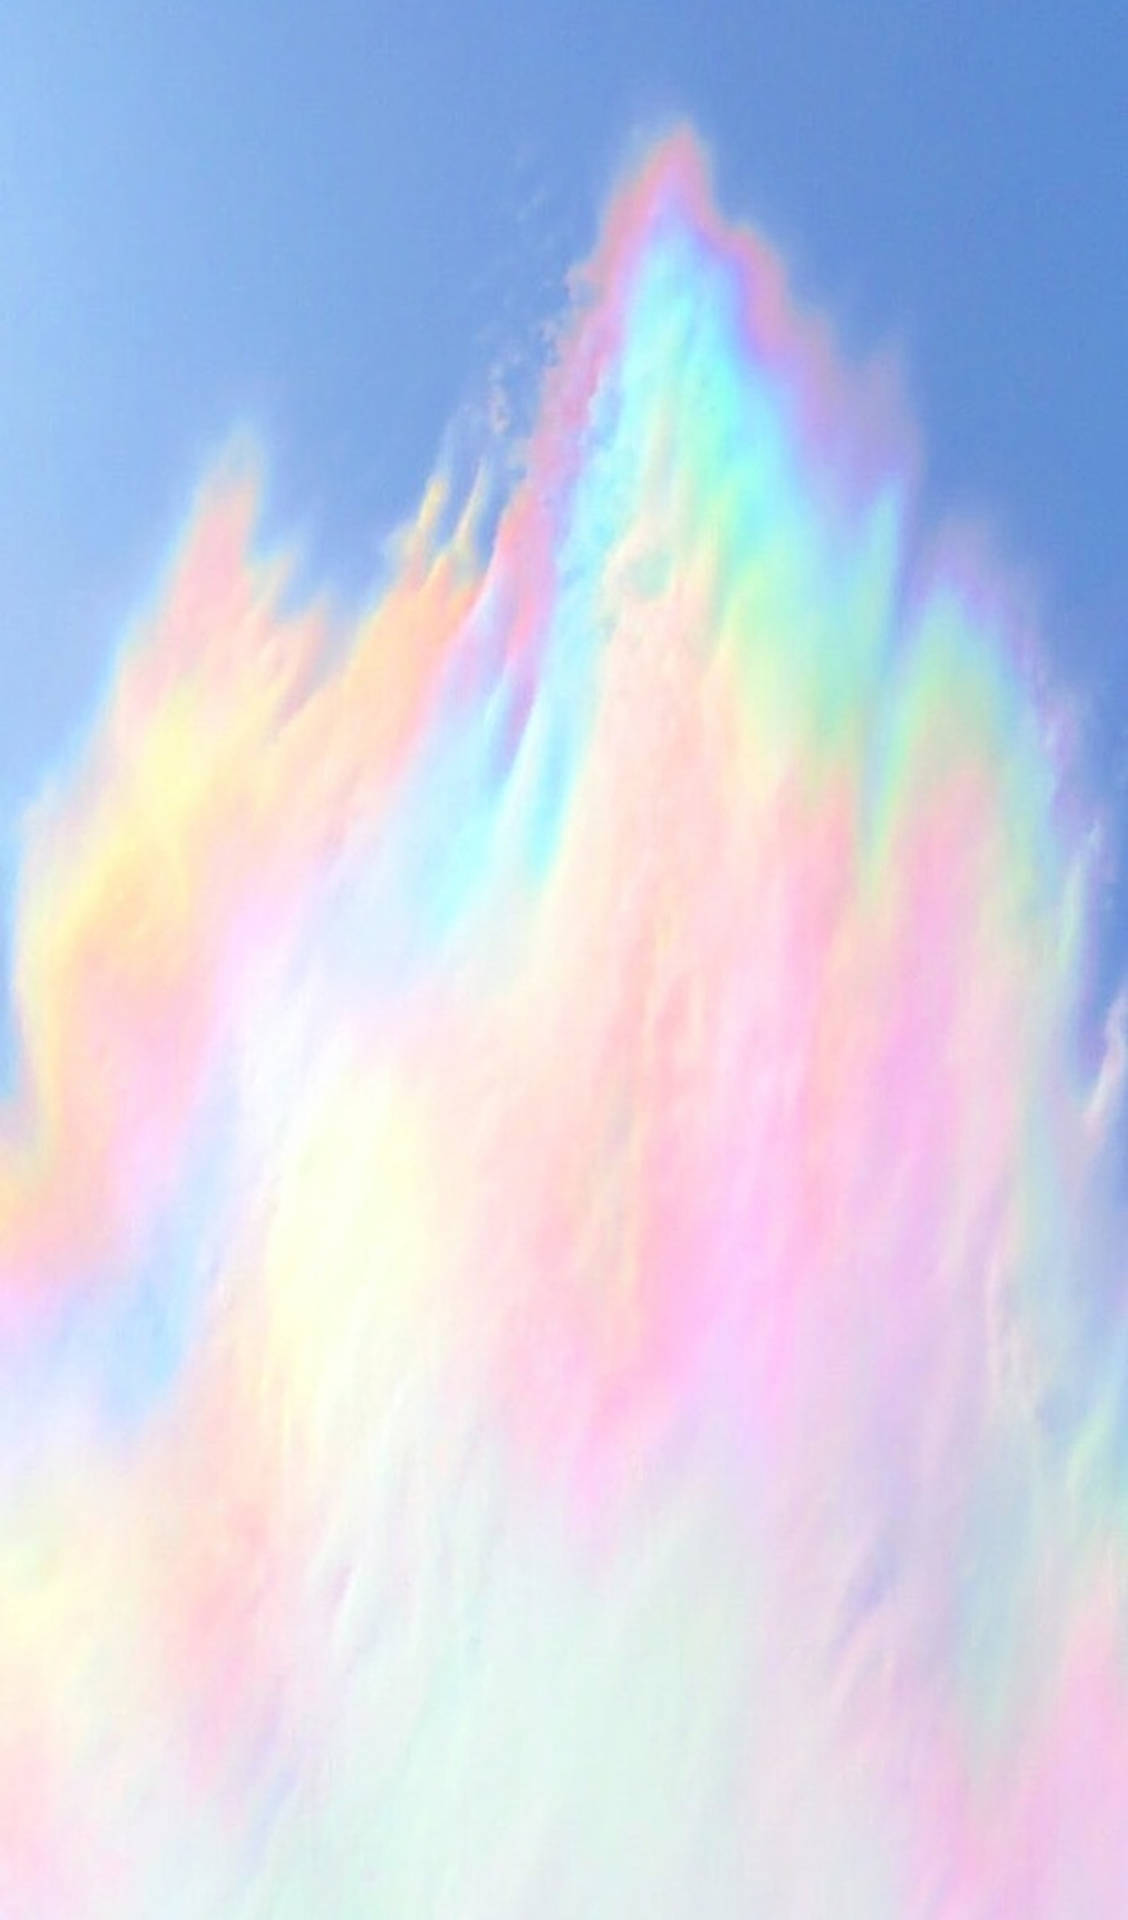 Caption: Vibrant Display Of Pastel Rainbow Hues